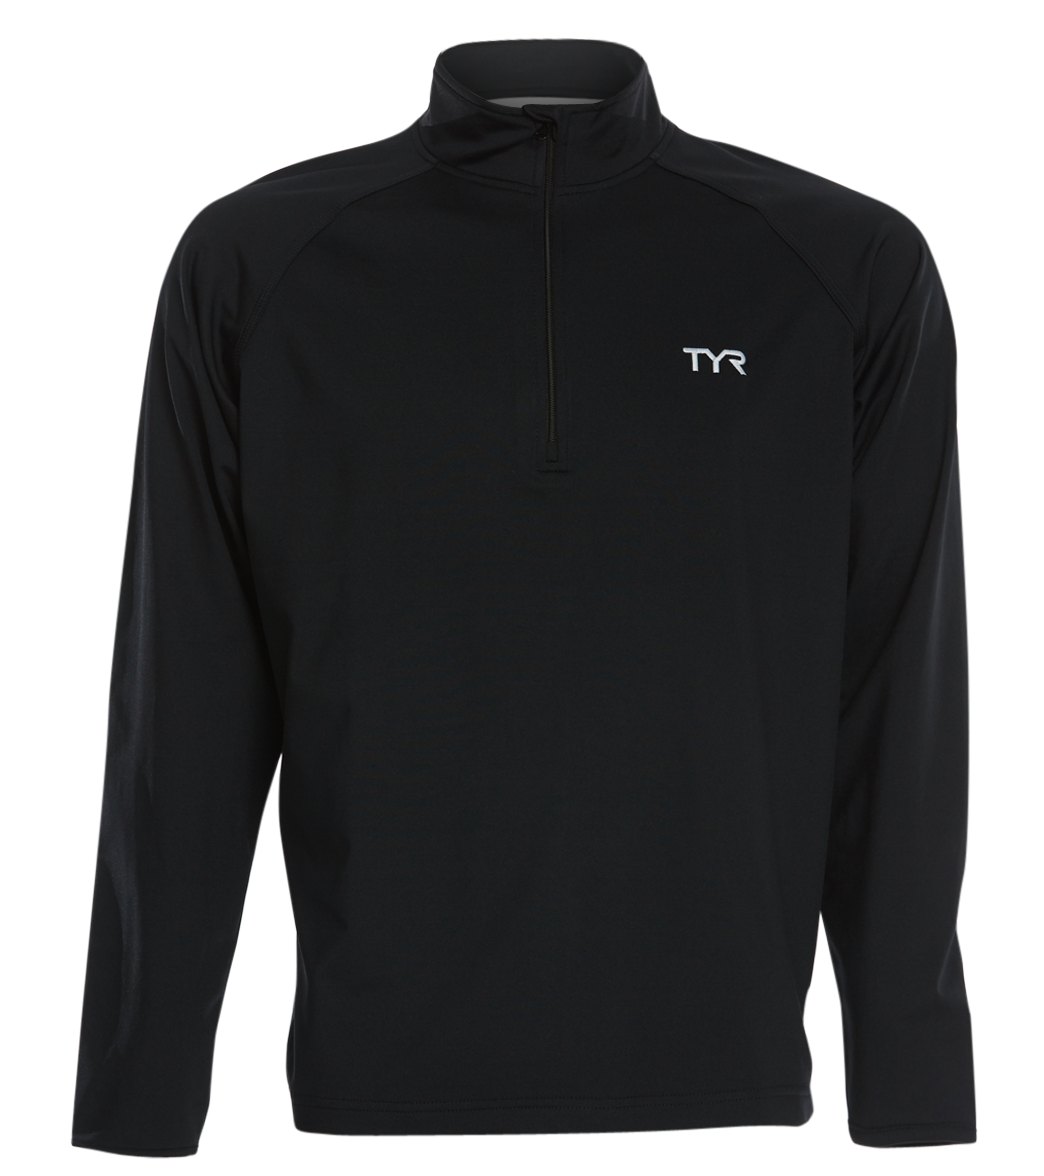 TYR Men's Alliance 1/4 Zip Pullover Jacket - Black Xl Polyester/Spandex - Swimoutlet.com